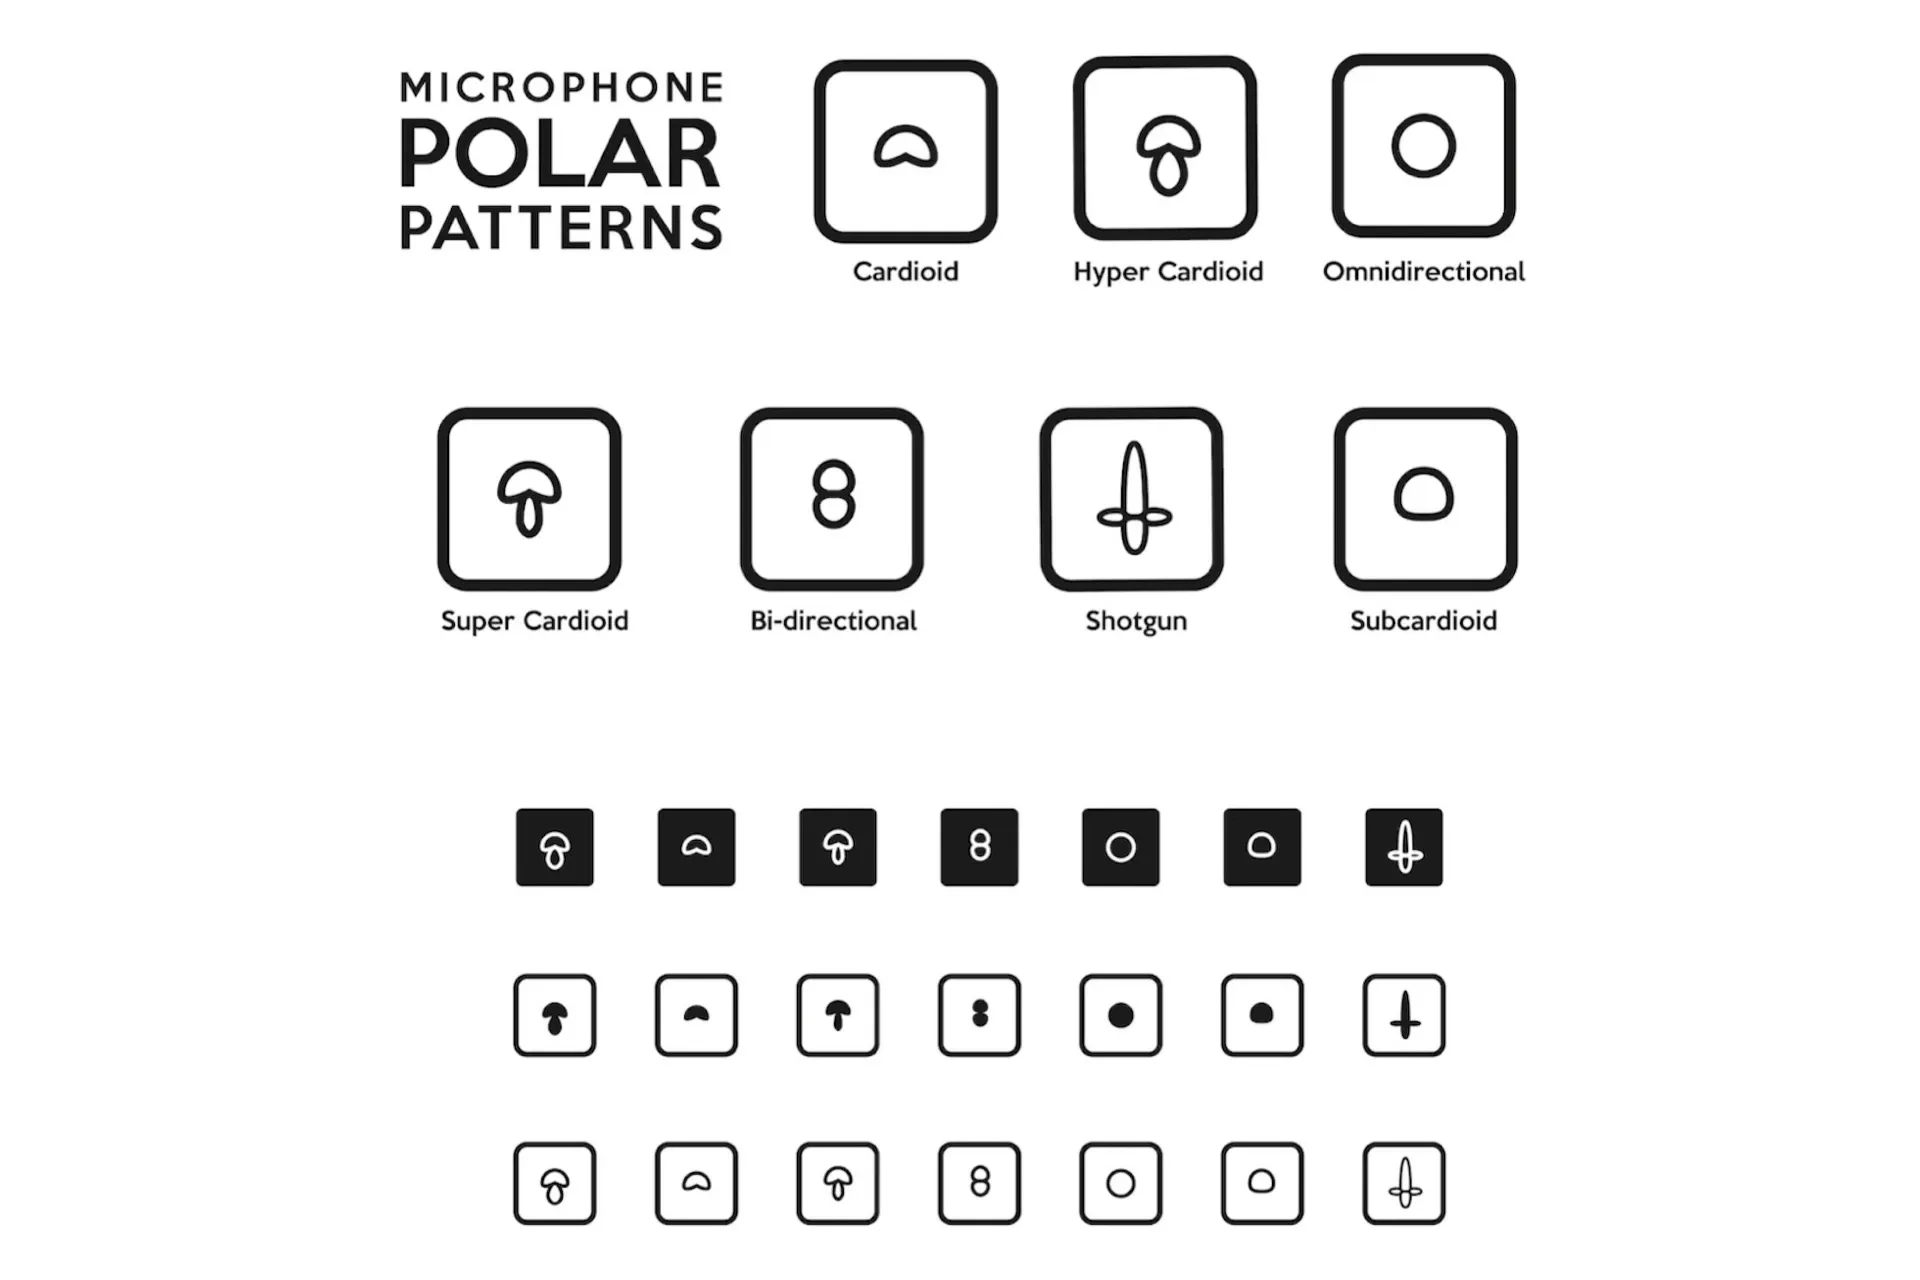 Microphone polar patterns